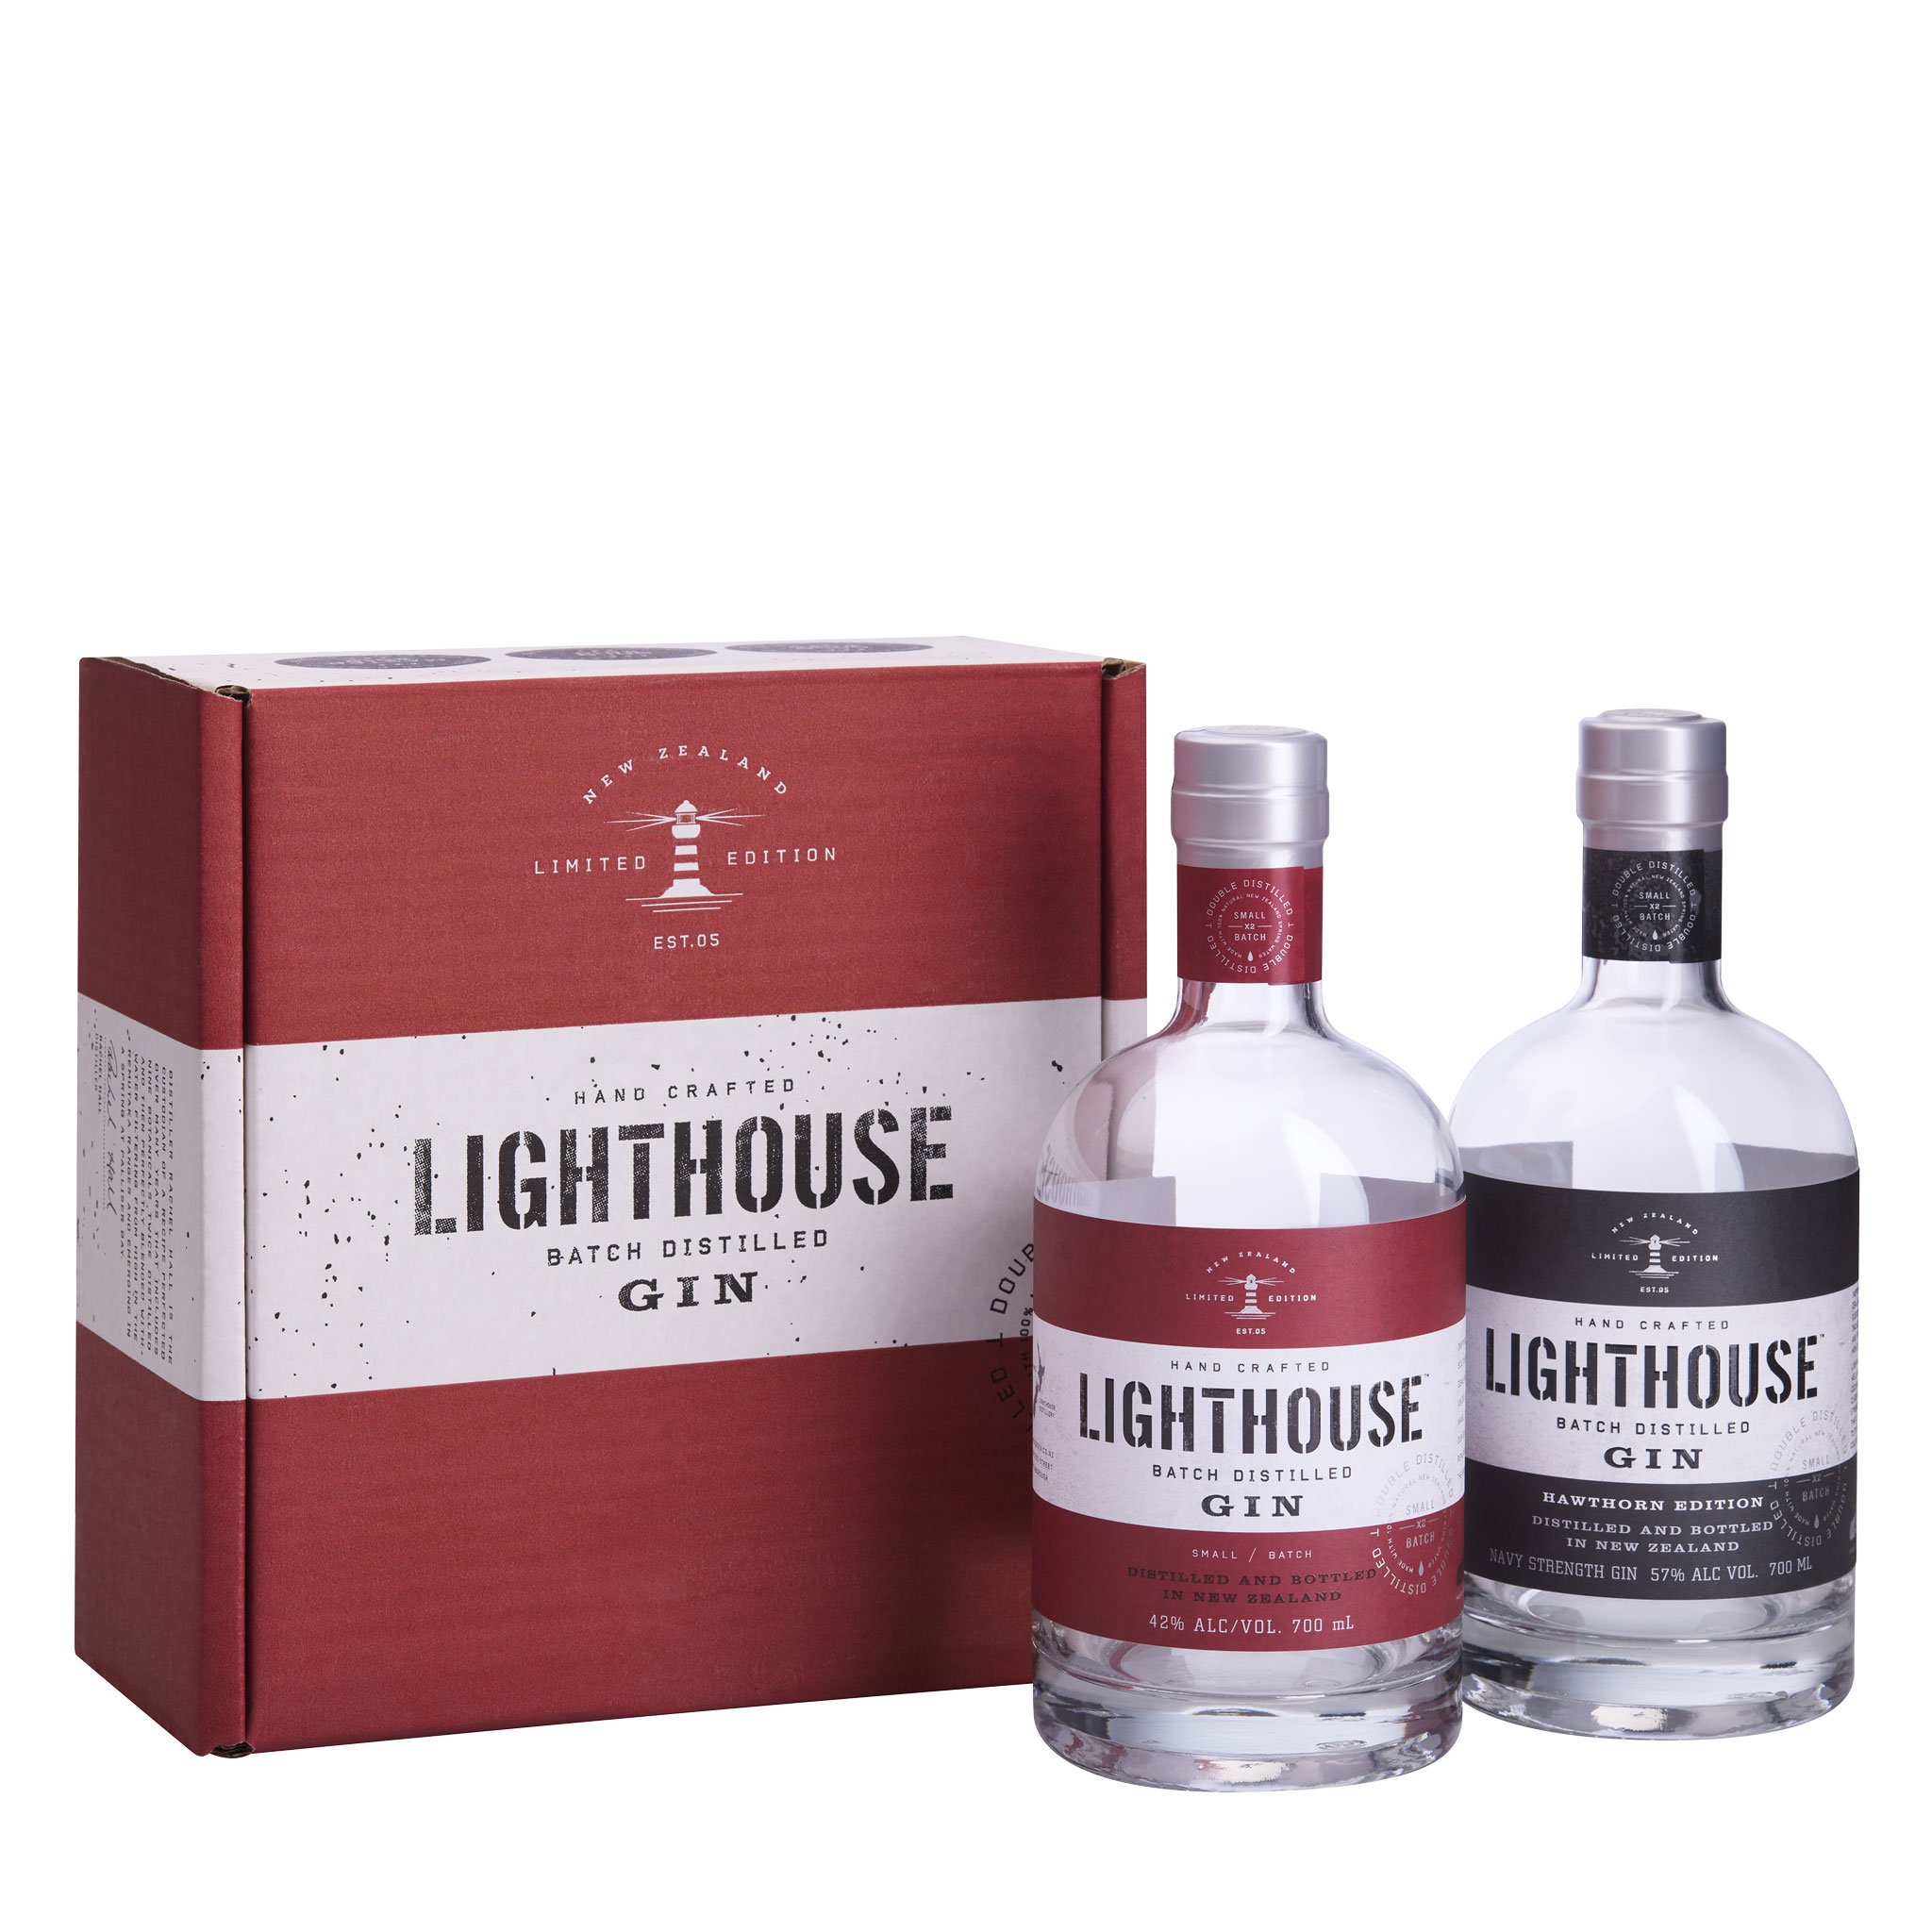 Lighthouse Gin Pair